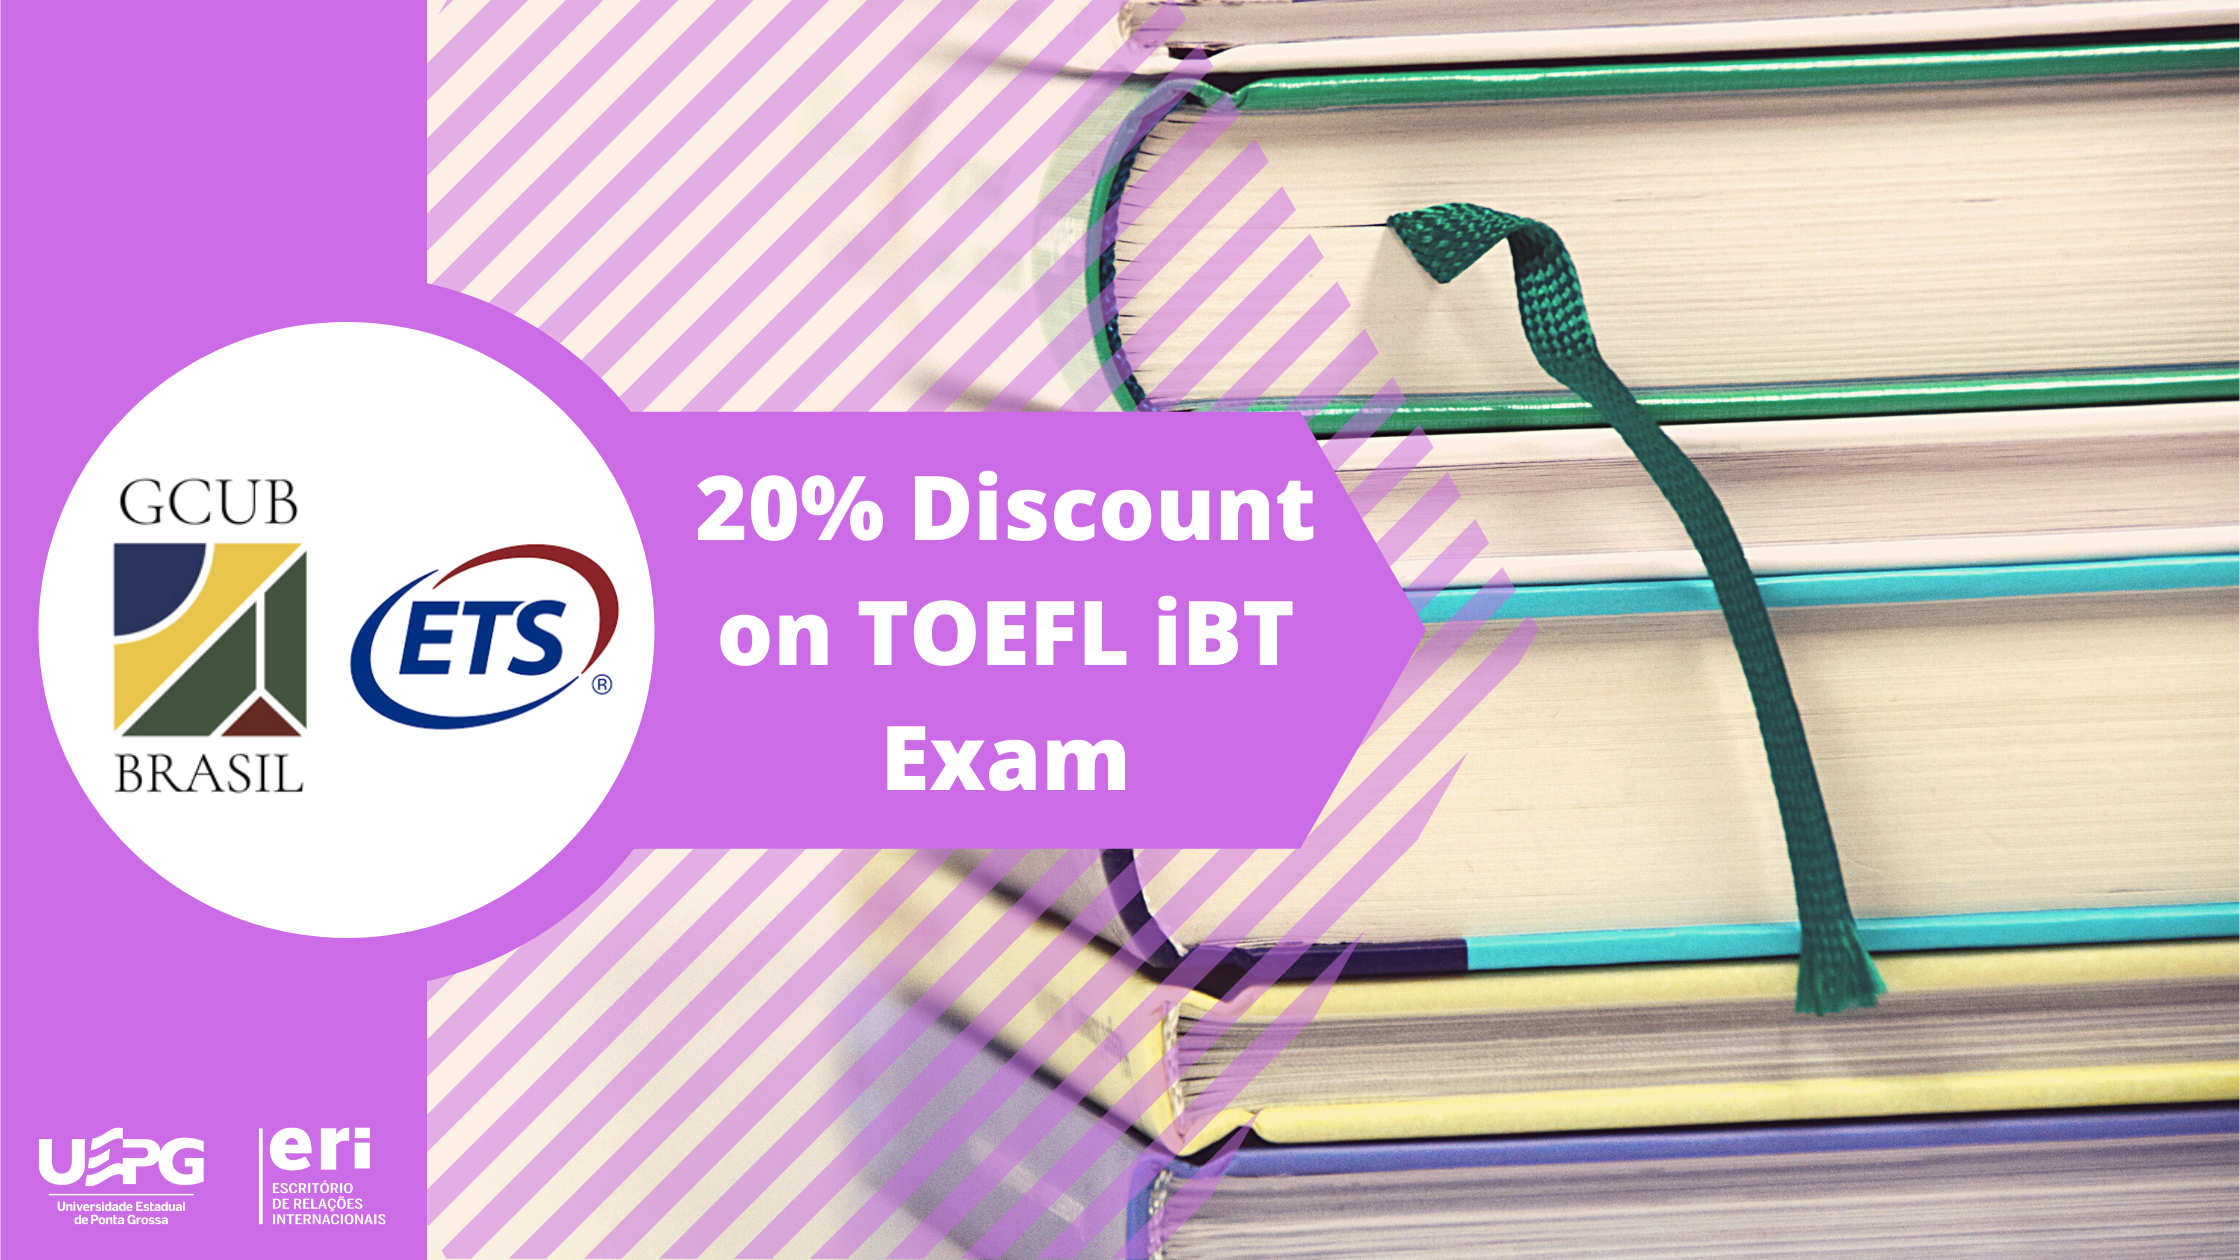 20% Discount on TOEFL iBT Exam